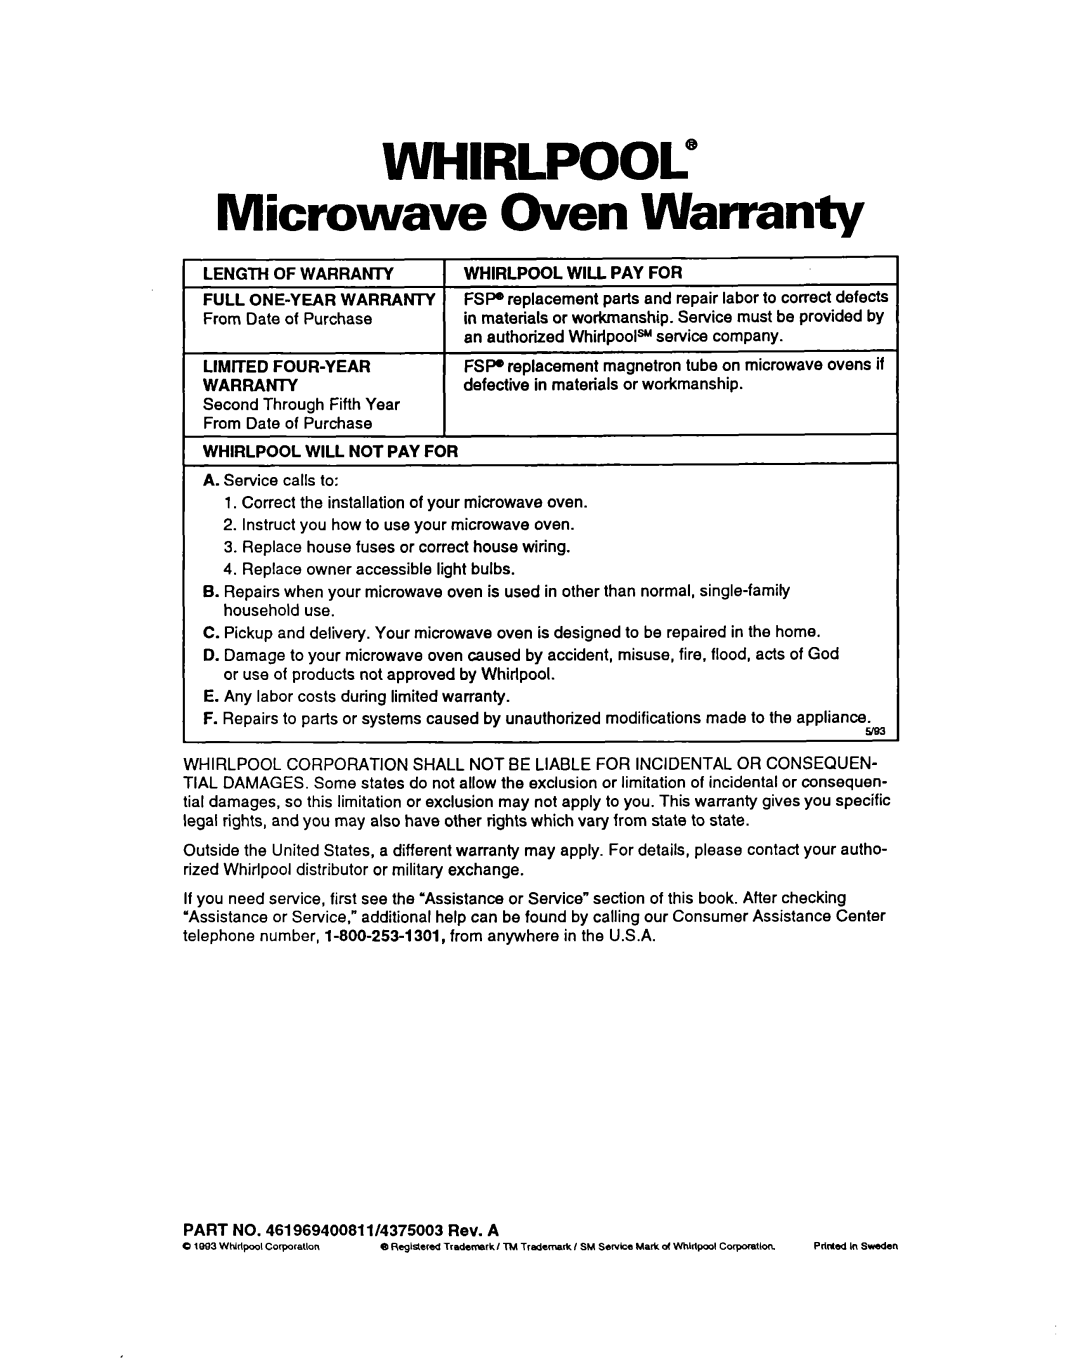 Whirlpool MG207OXAB Microwave Oven Warranty, Whirlpool”, Length Of Warranty Whirlpool Will Pay For, LlMlTED FOUR-YEAR 